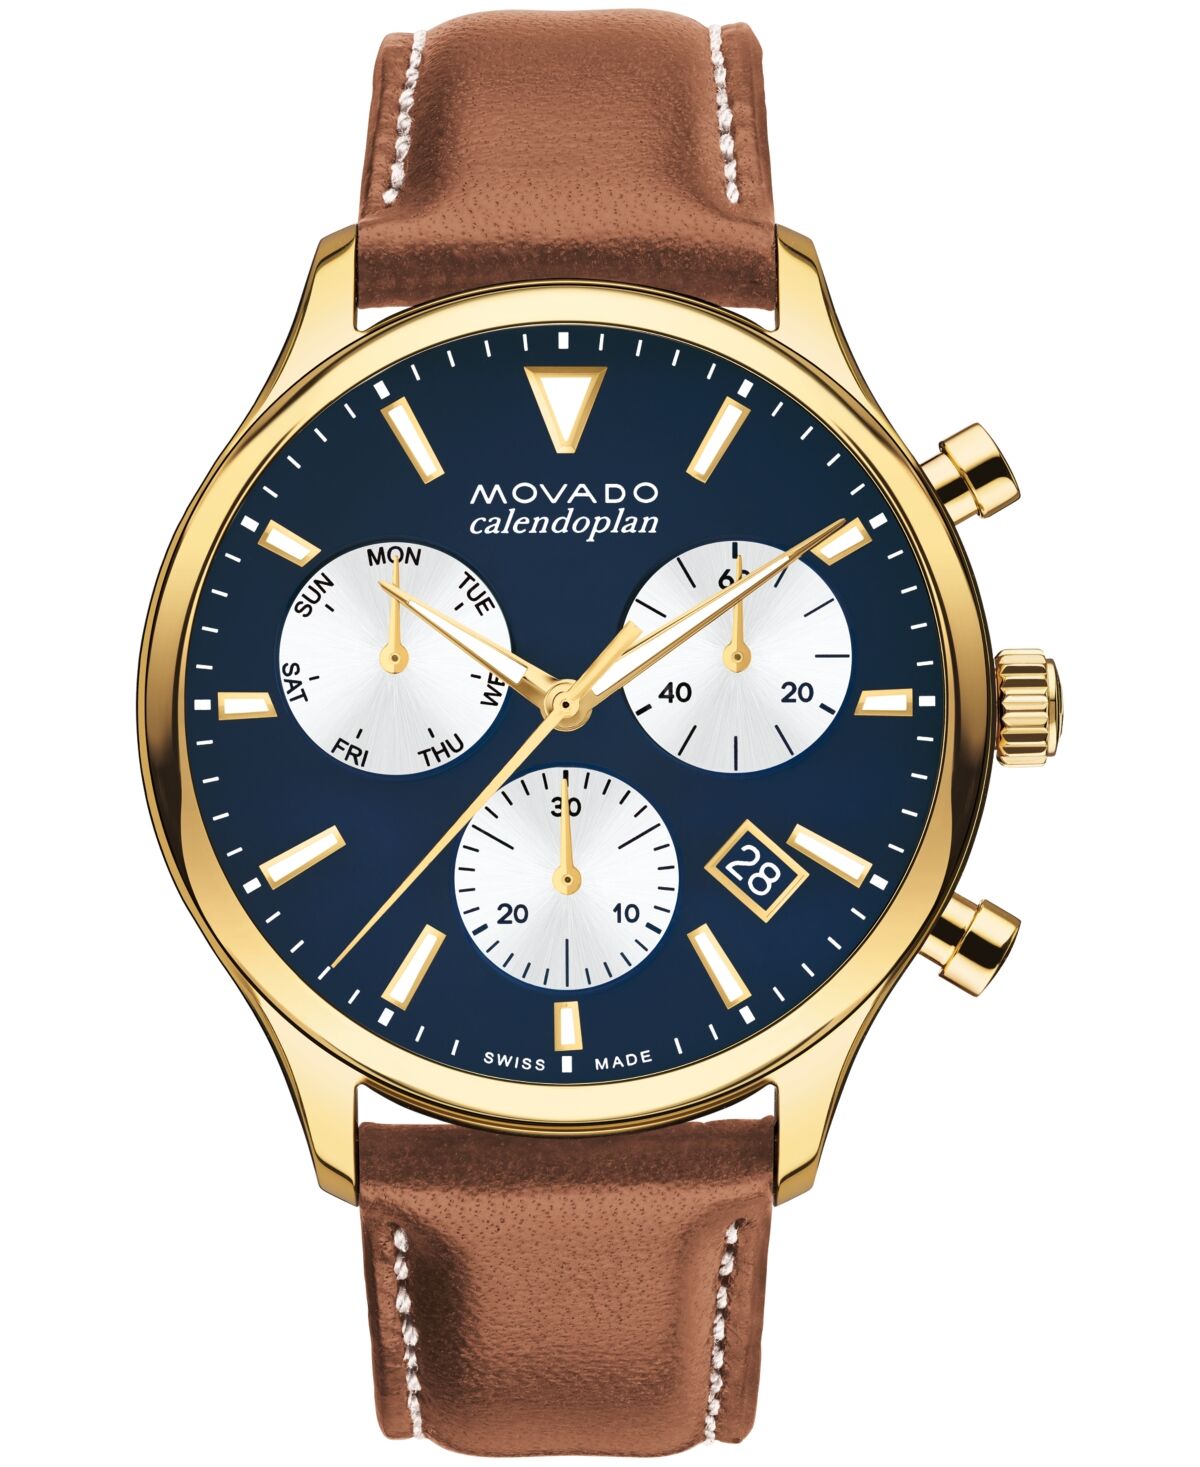 Movado Men's Heritage Calendoplan Swiss Quartz Chronograph Cognac Genuine Leather Strap Watch 43mm - Brown